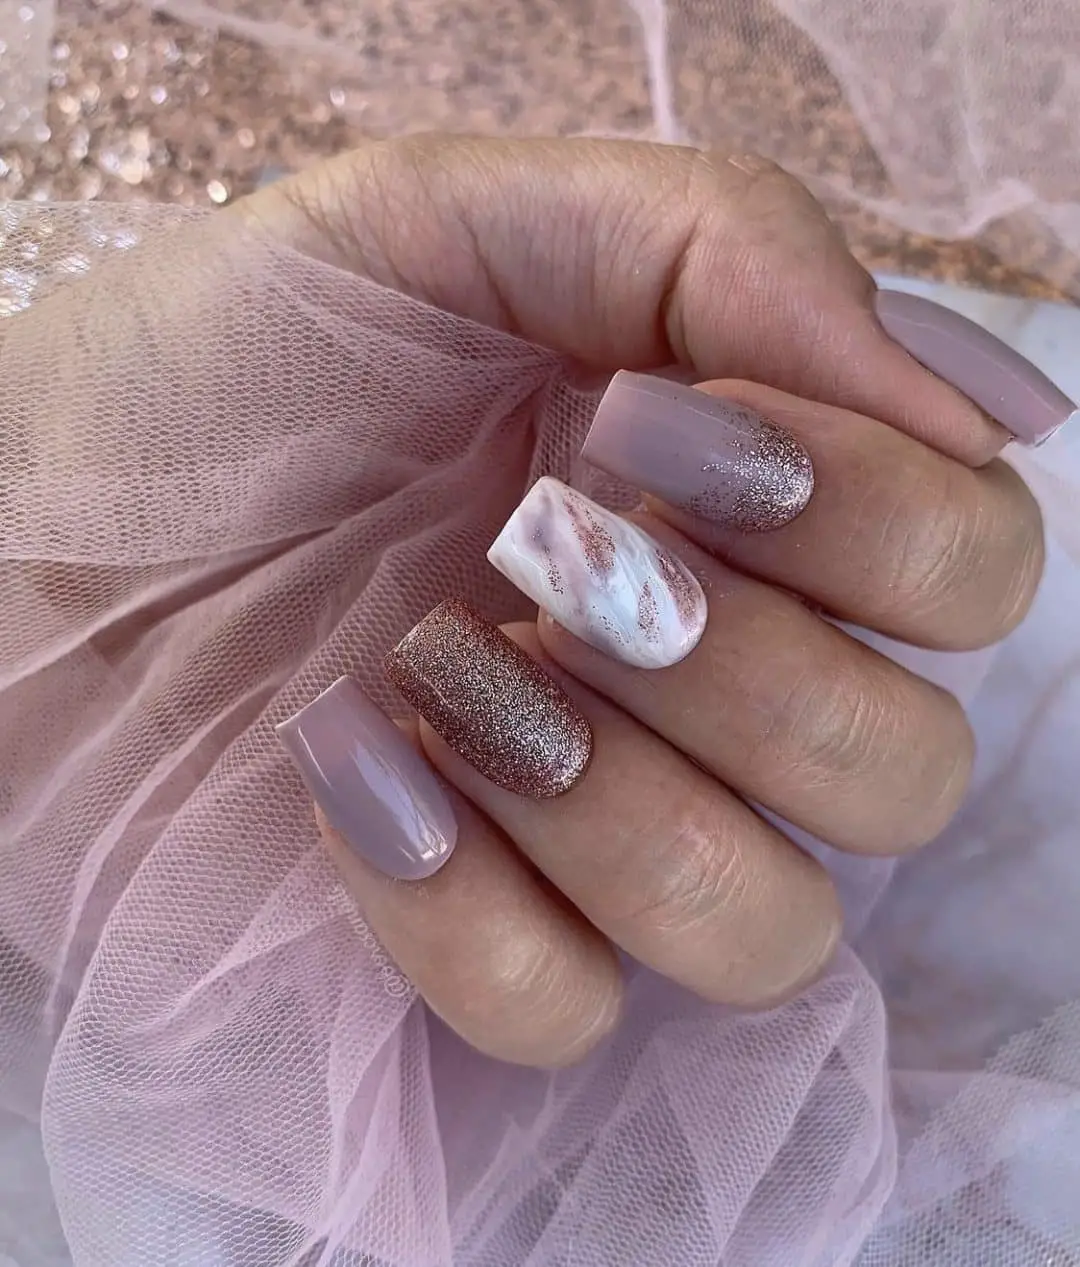 blush nail designs